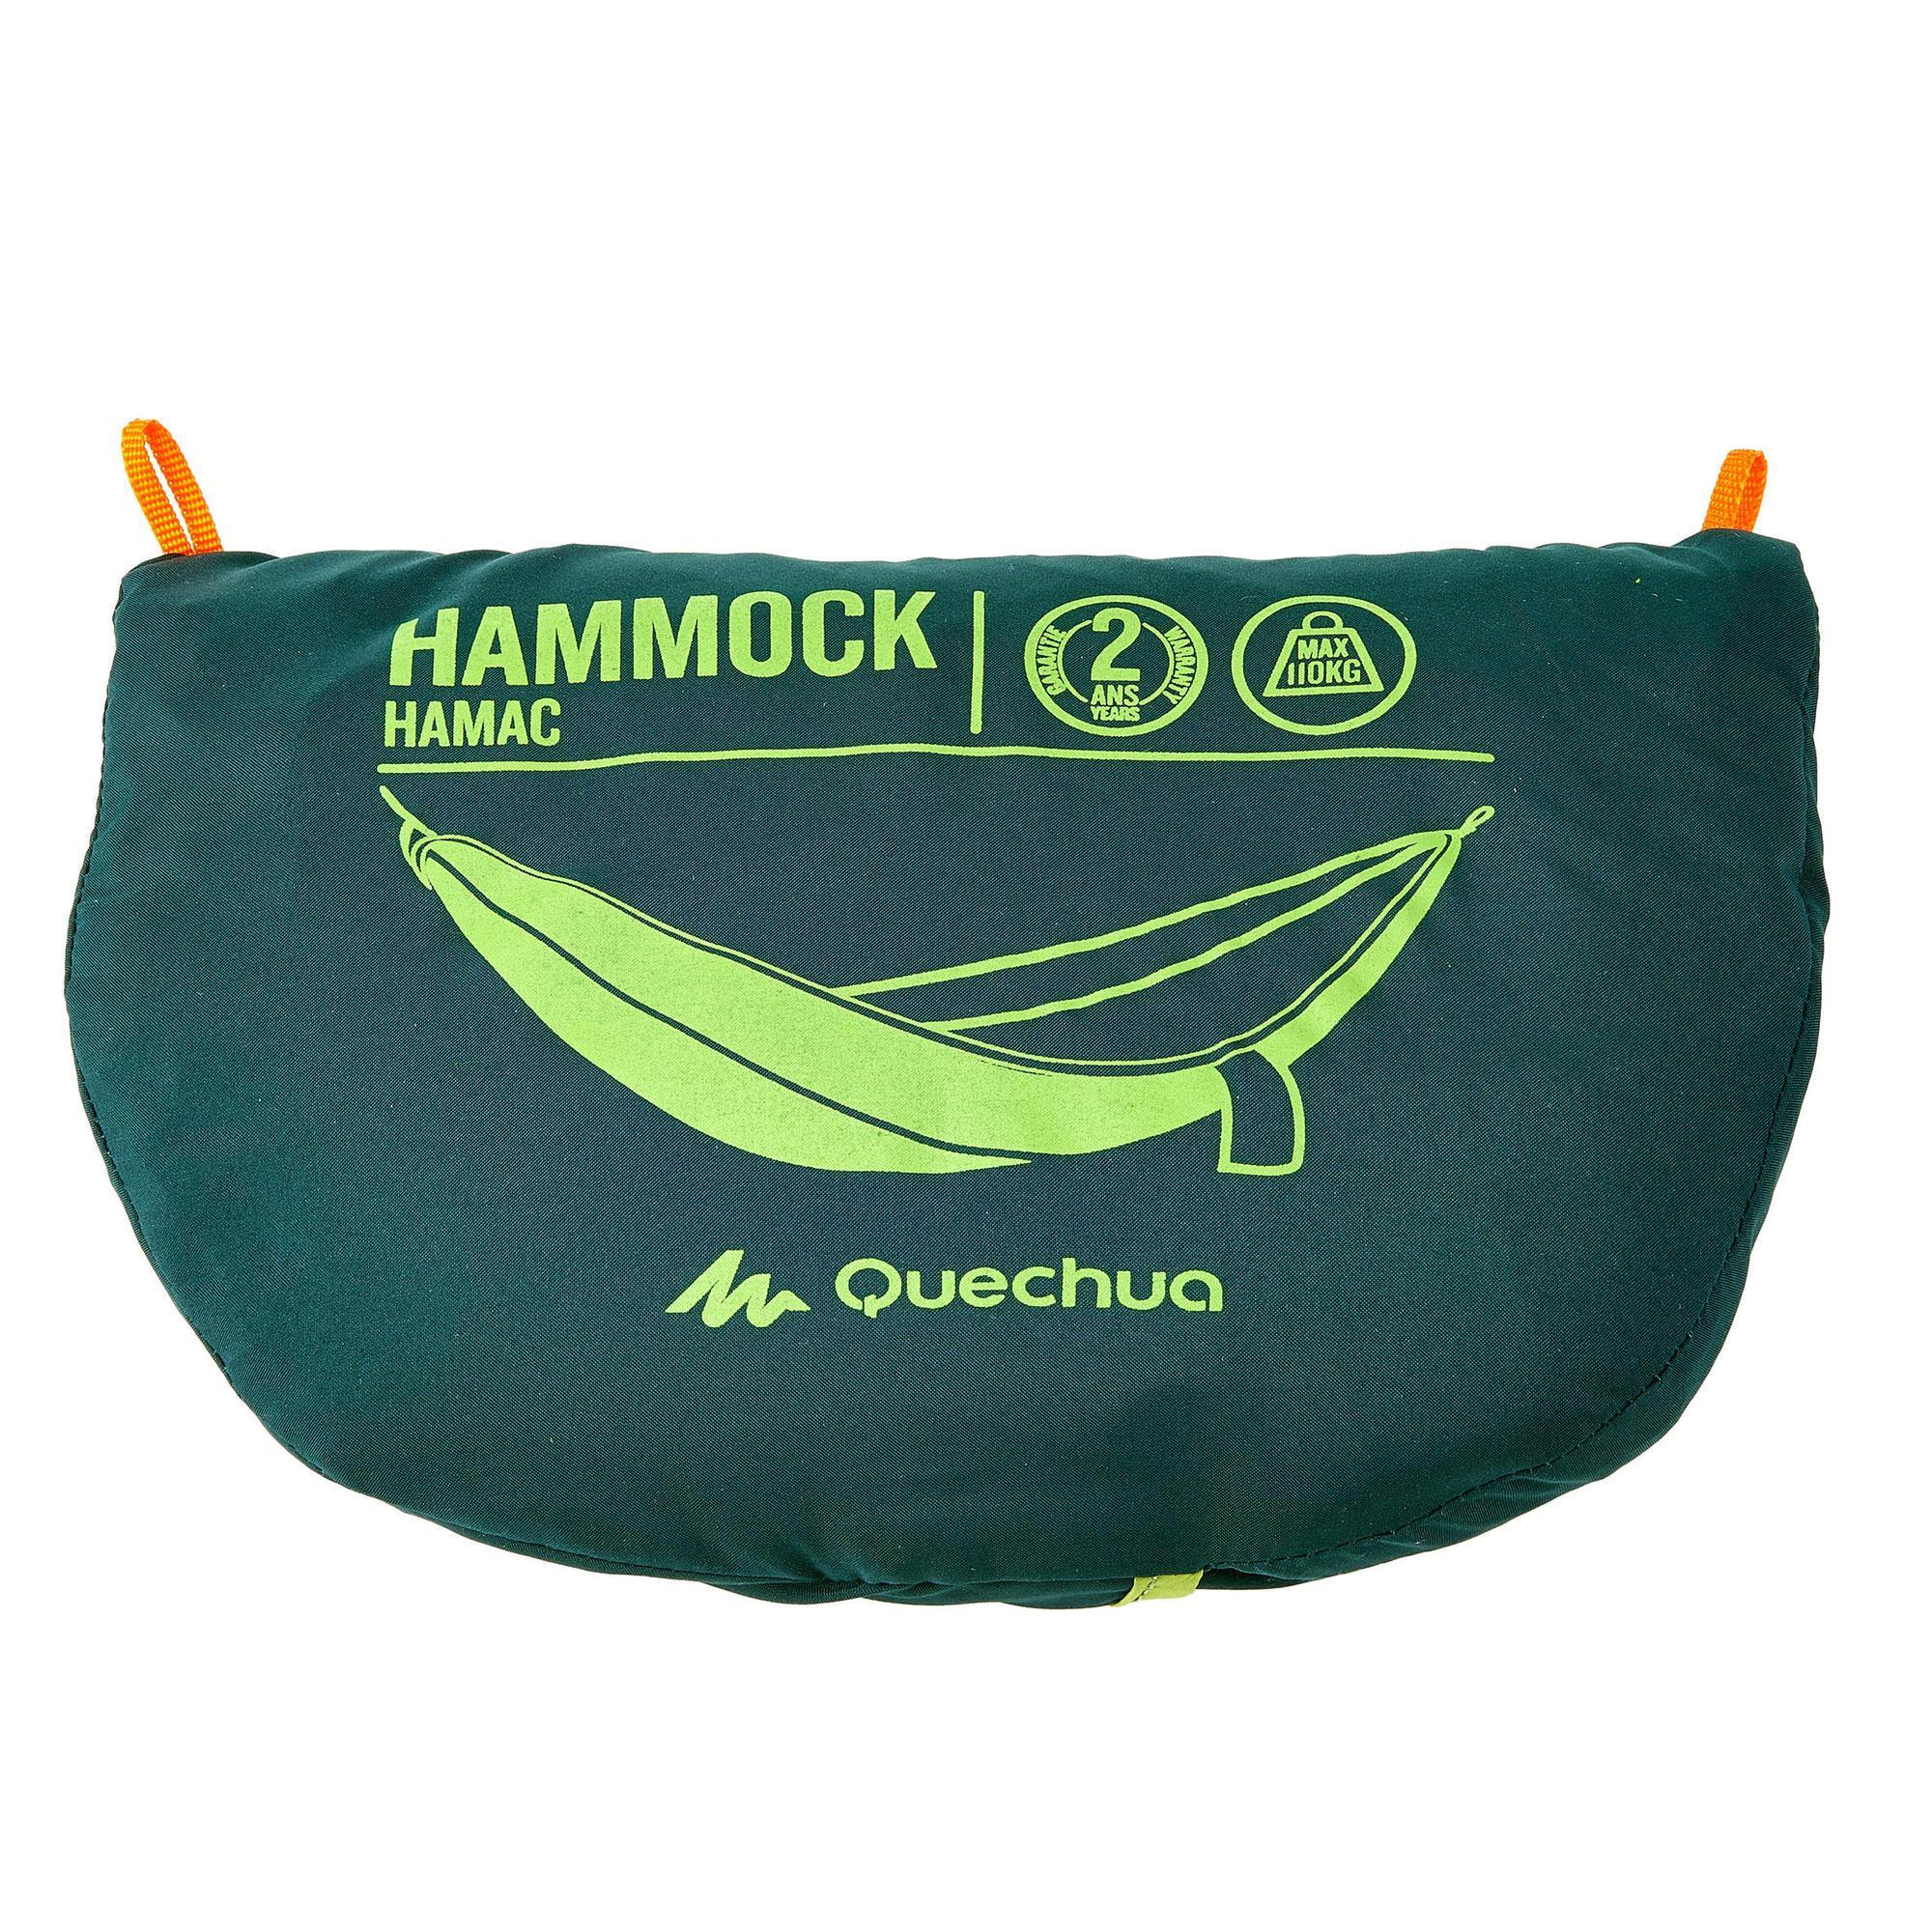 Single hammock - Basic 260 x 152 cm - 1 